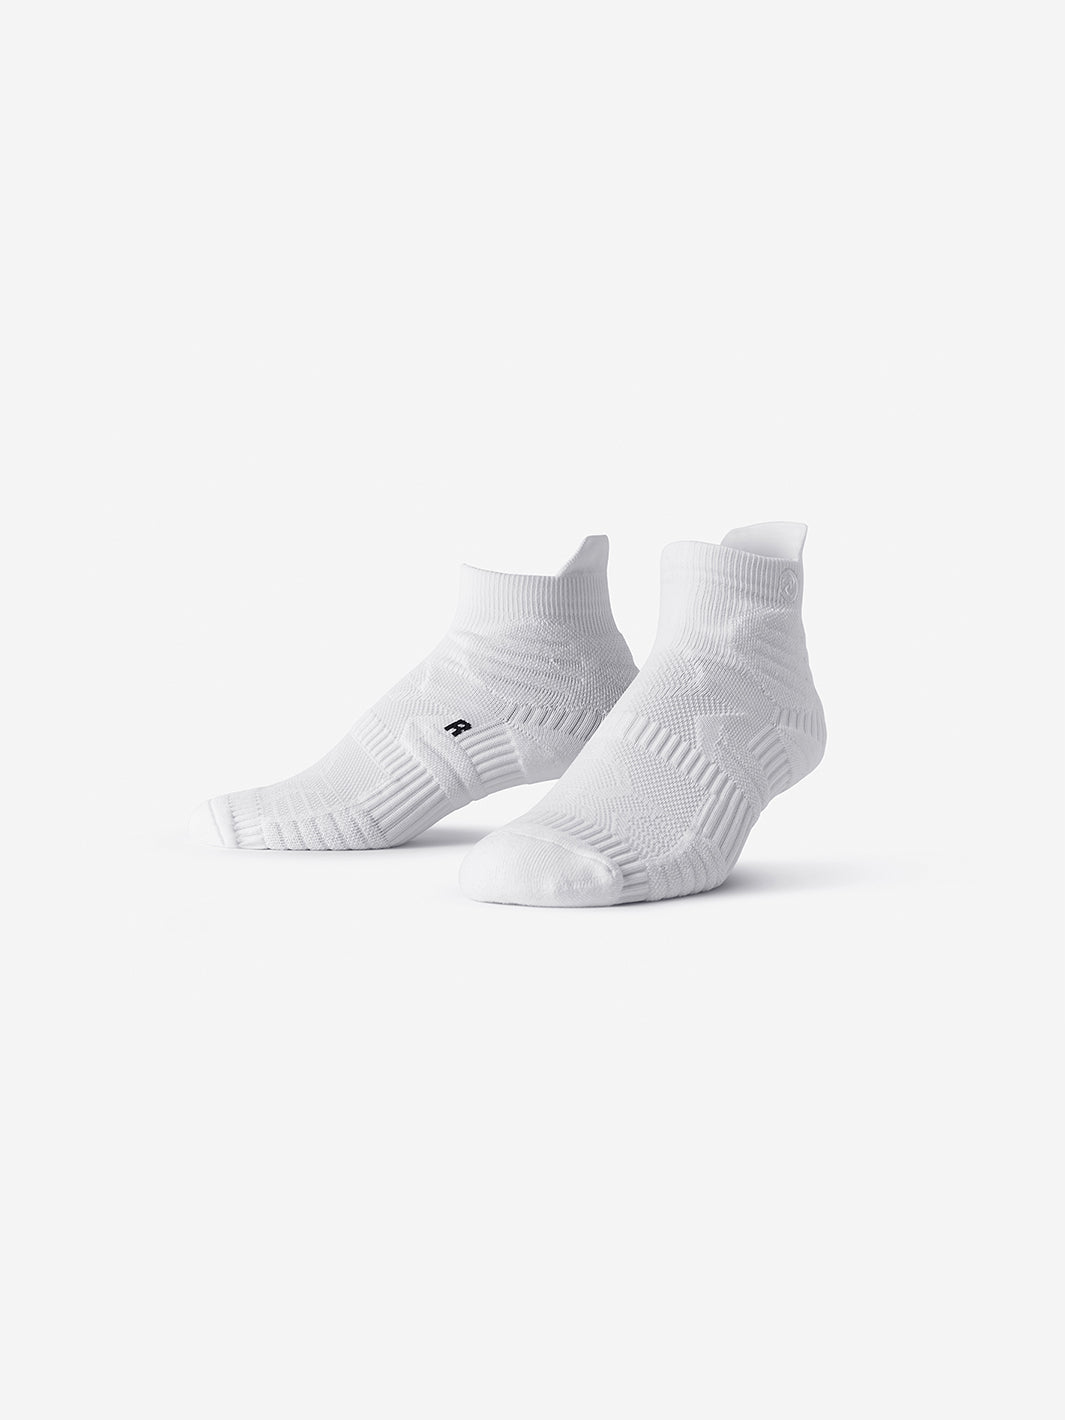 White Cushioned Everyday Ankle Sock | White Athletic Socks | SMRTFT